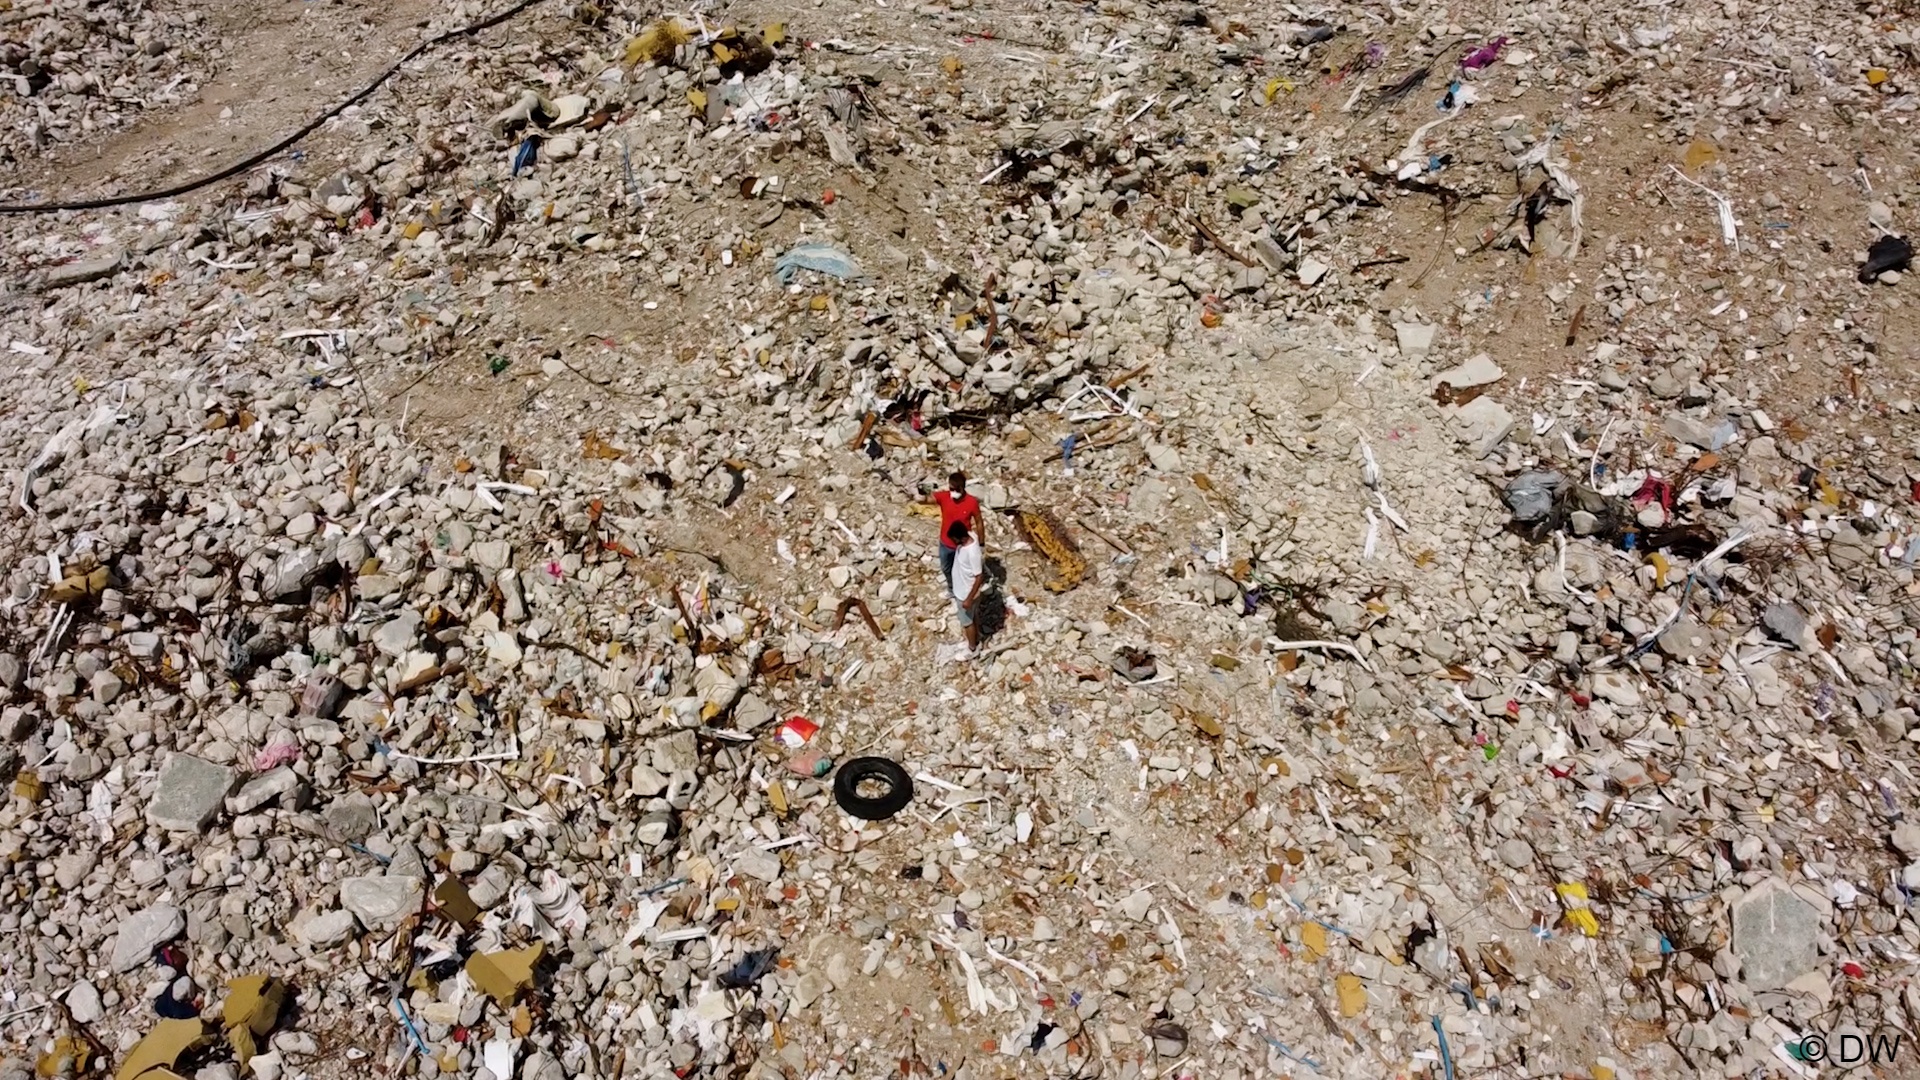 Drone footage shows Utku Firat taking dust samples in Hatay, Turkey (image: DW) 